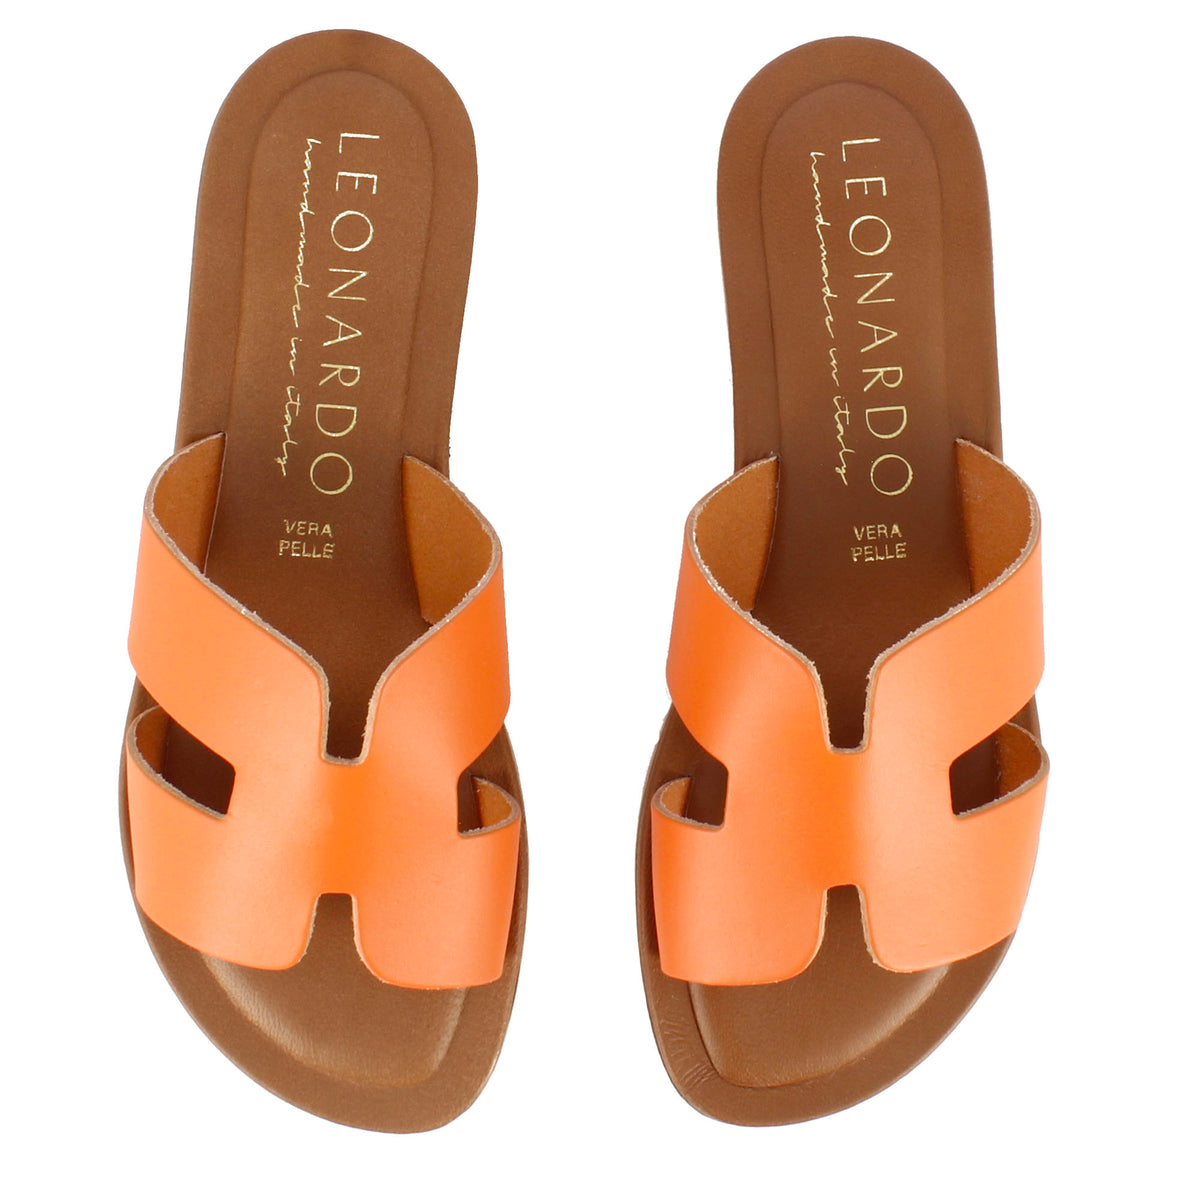 Orange leather women's slippers